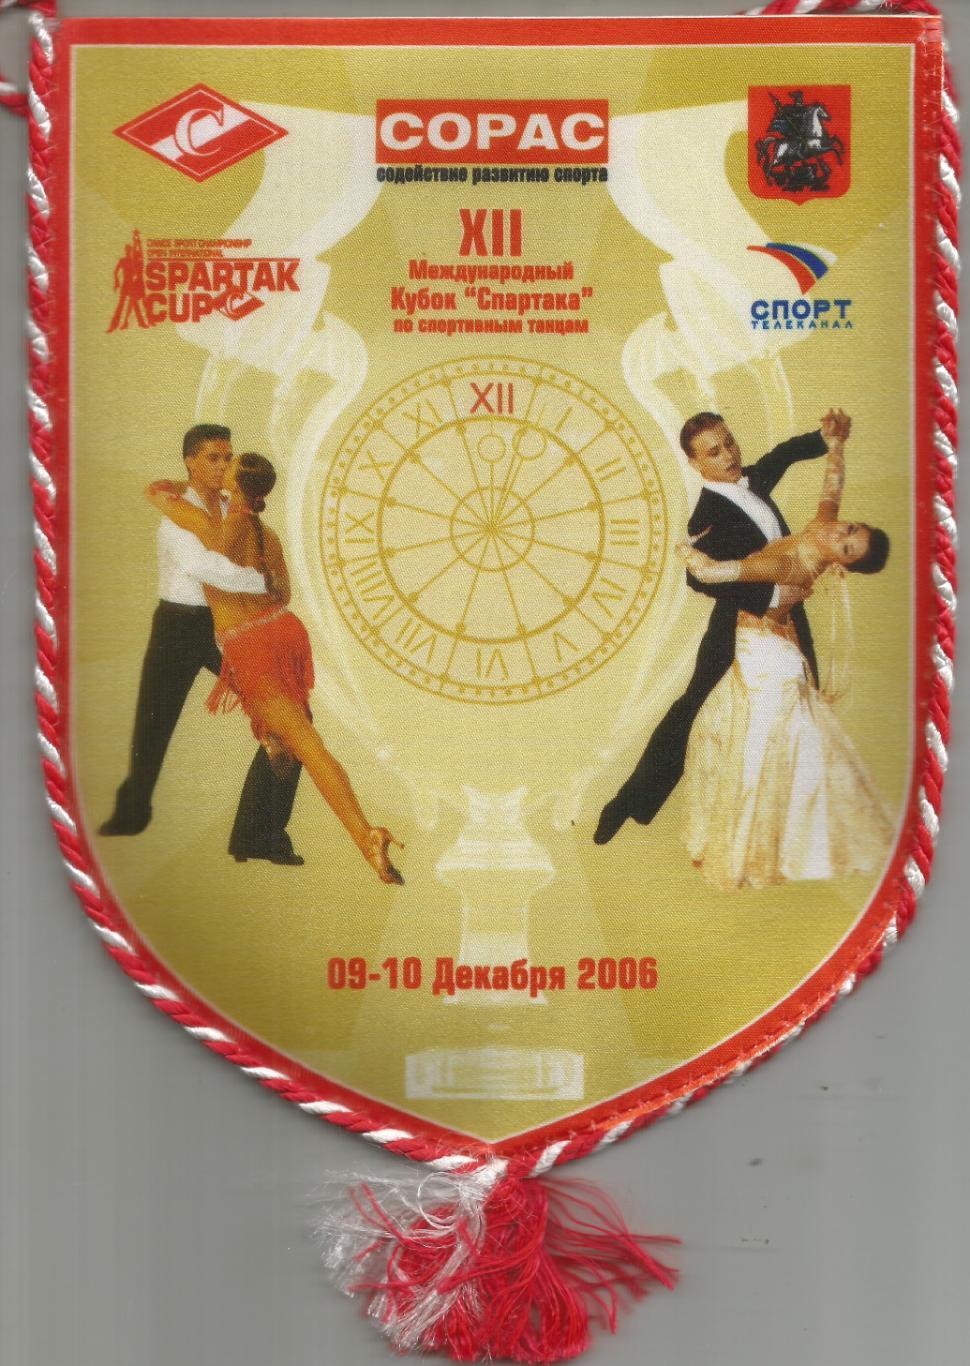 2006 Вымпел Кубок спартака (16 на 21 см)